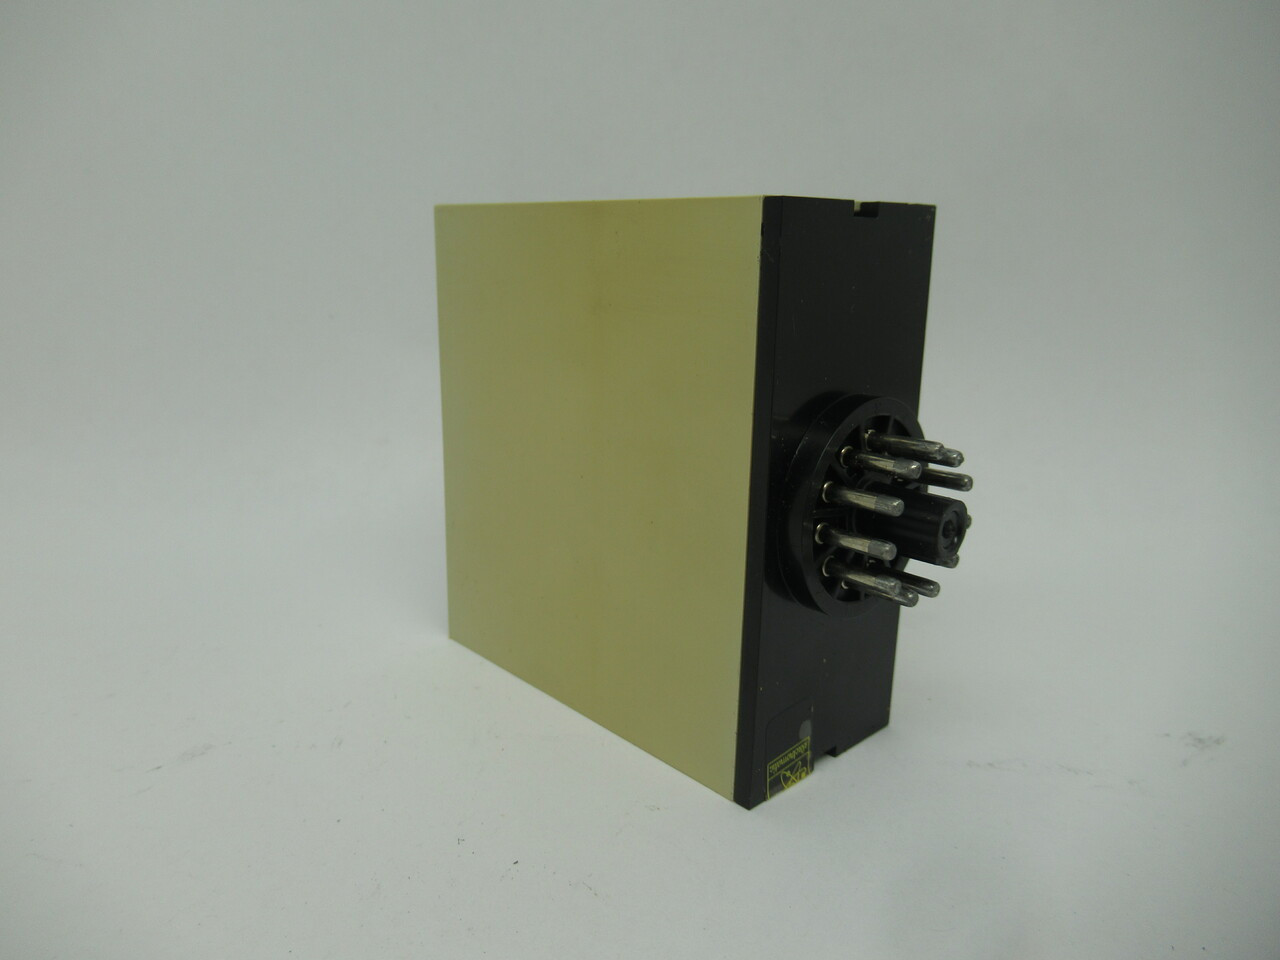 Electromatic SV190120 OPTO Sensing Dual Level Relay 120VAC 45-65HZ 2W NOP